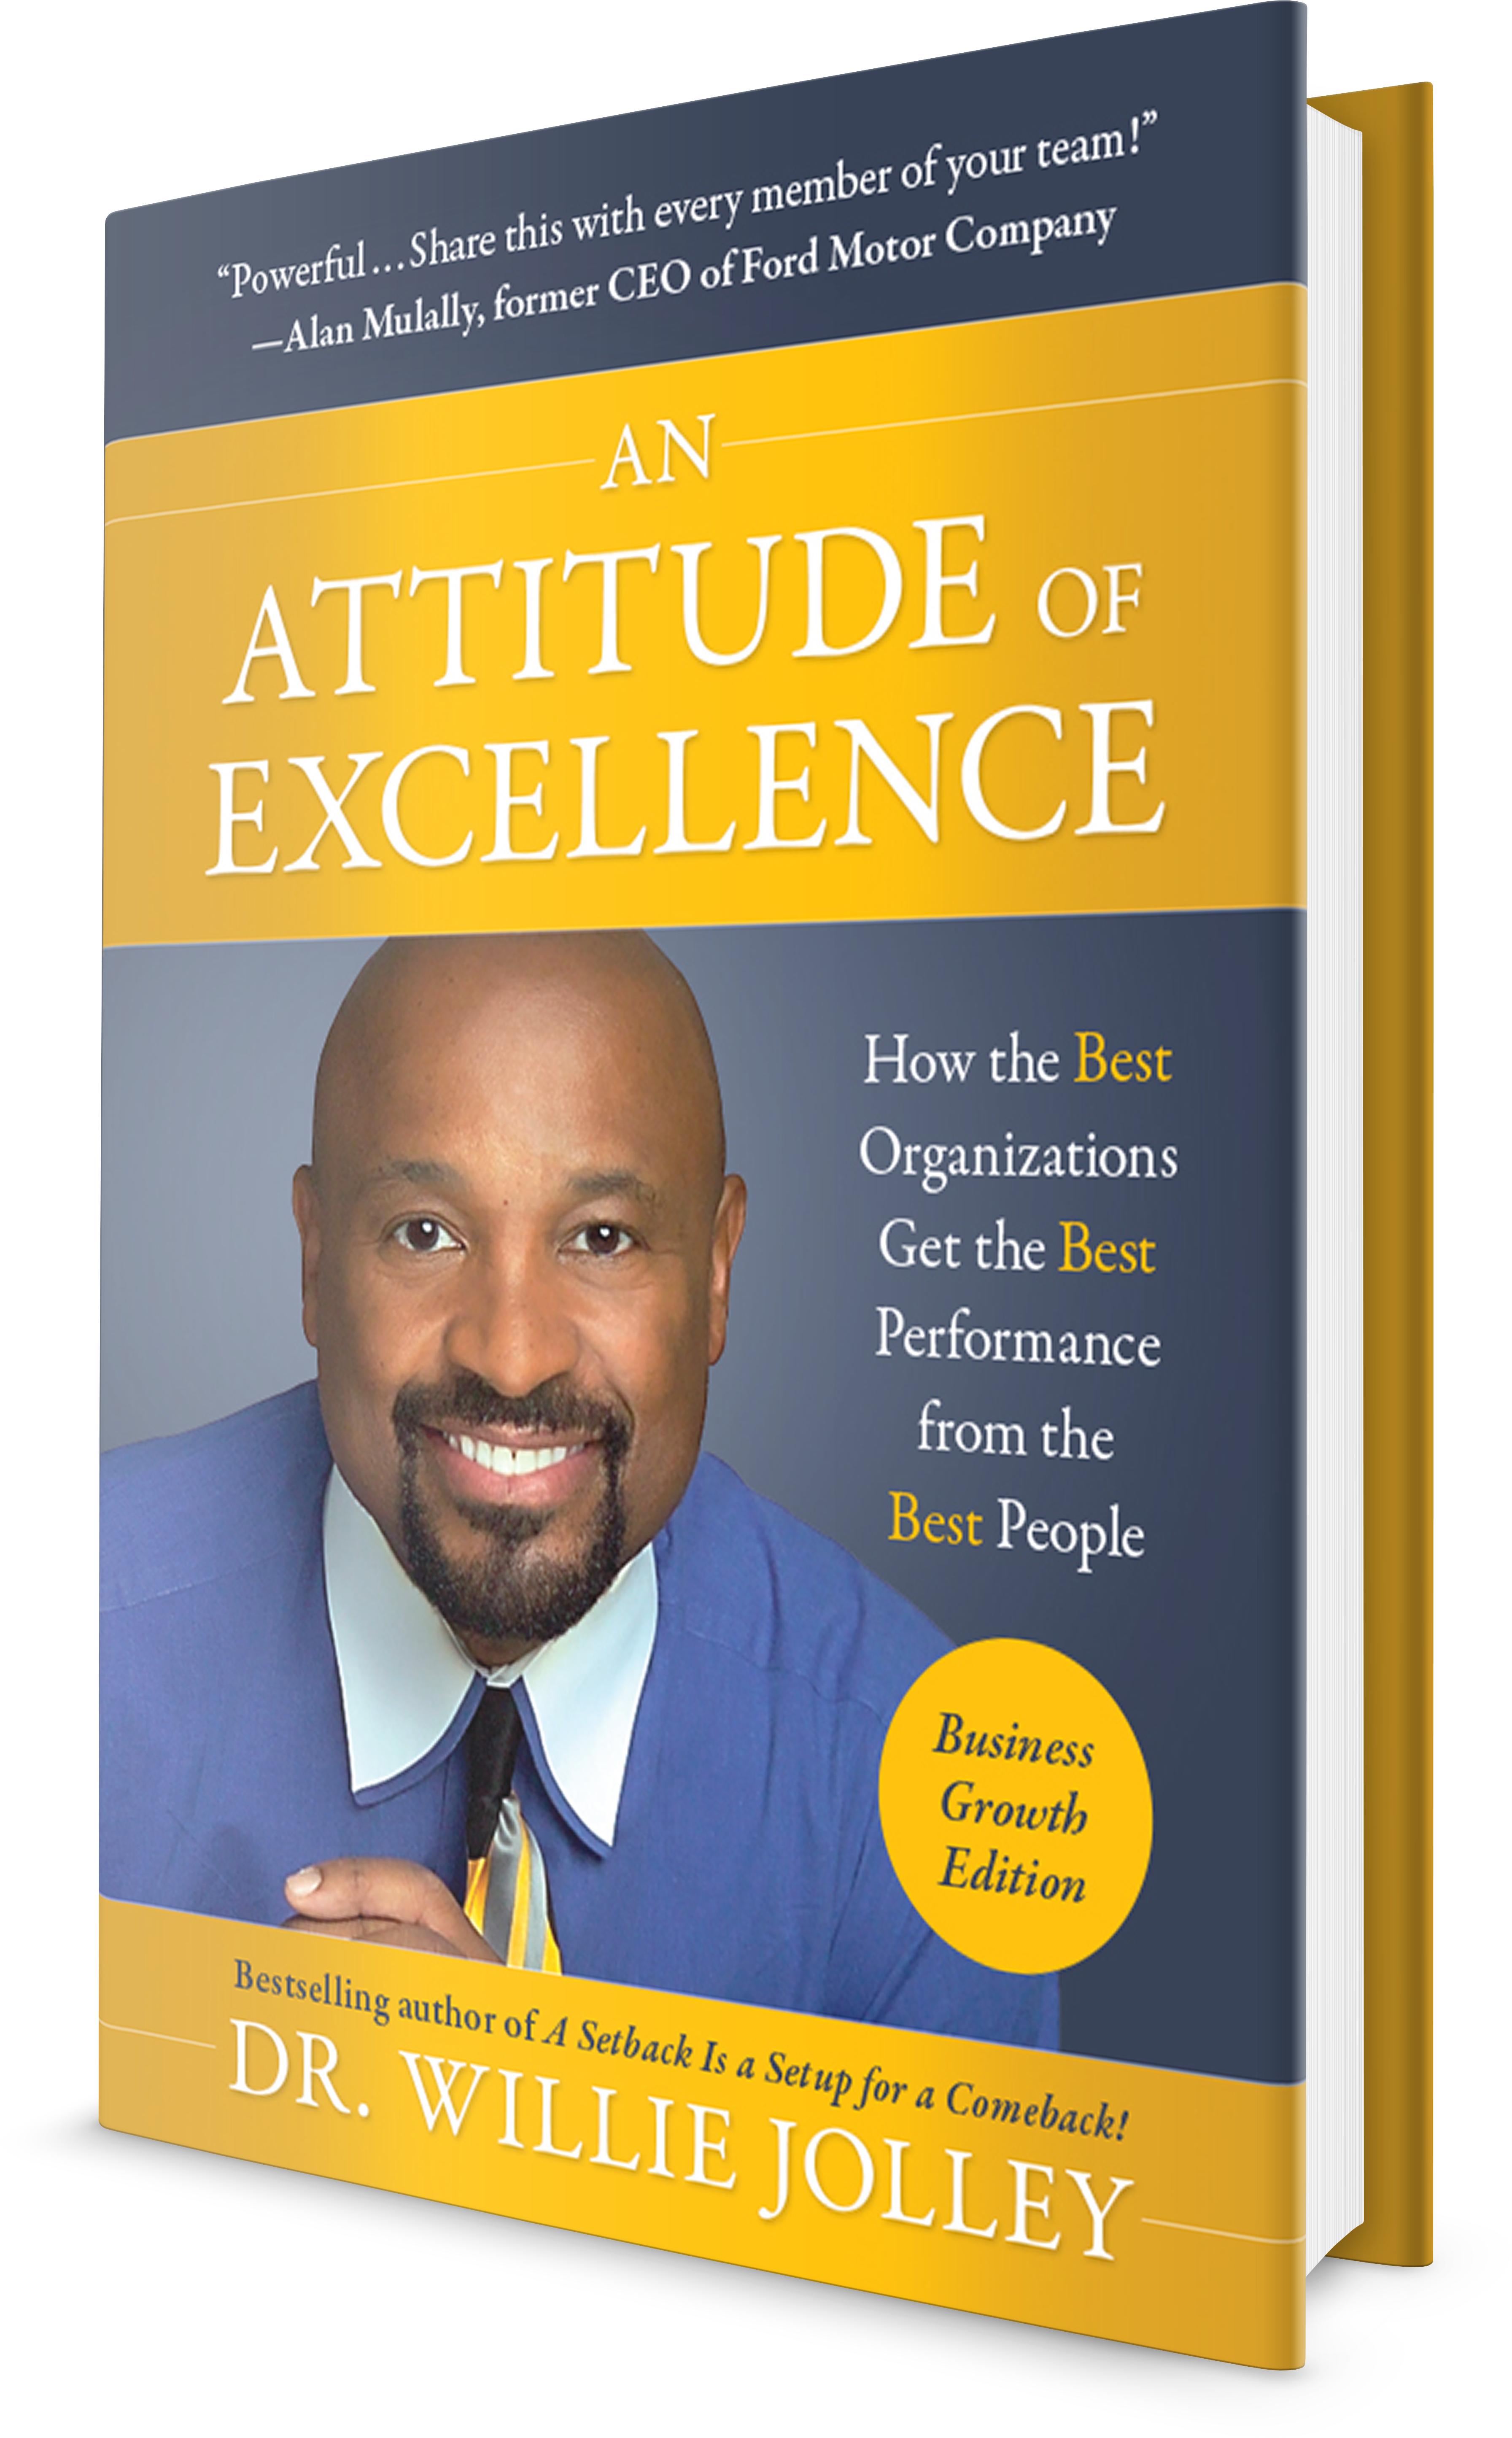 Attitude of Excellence book cover